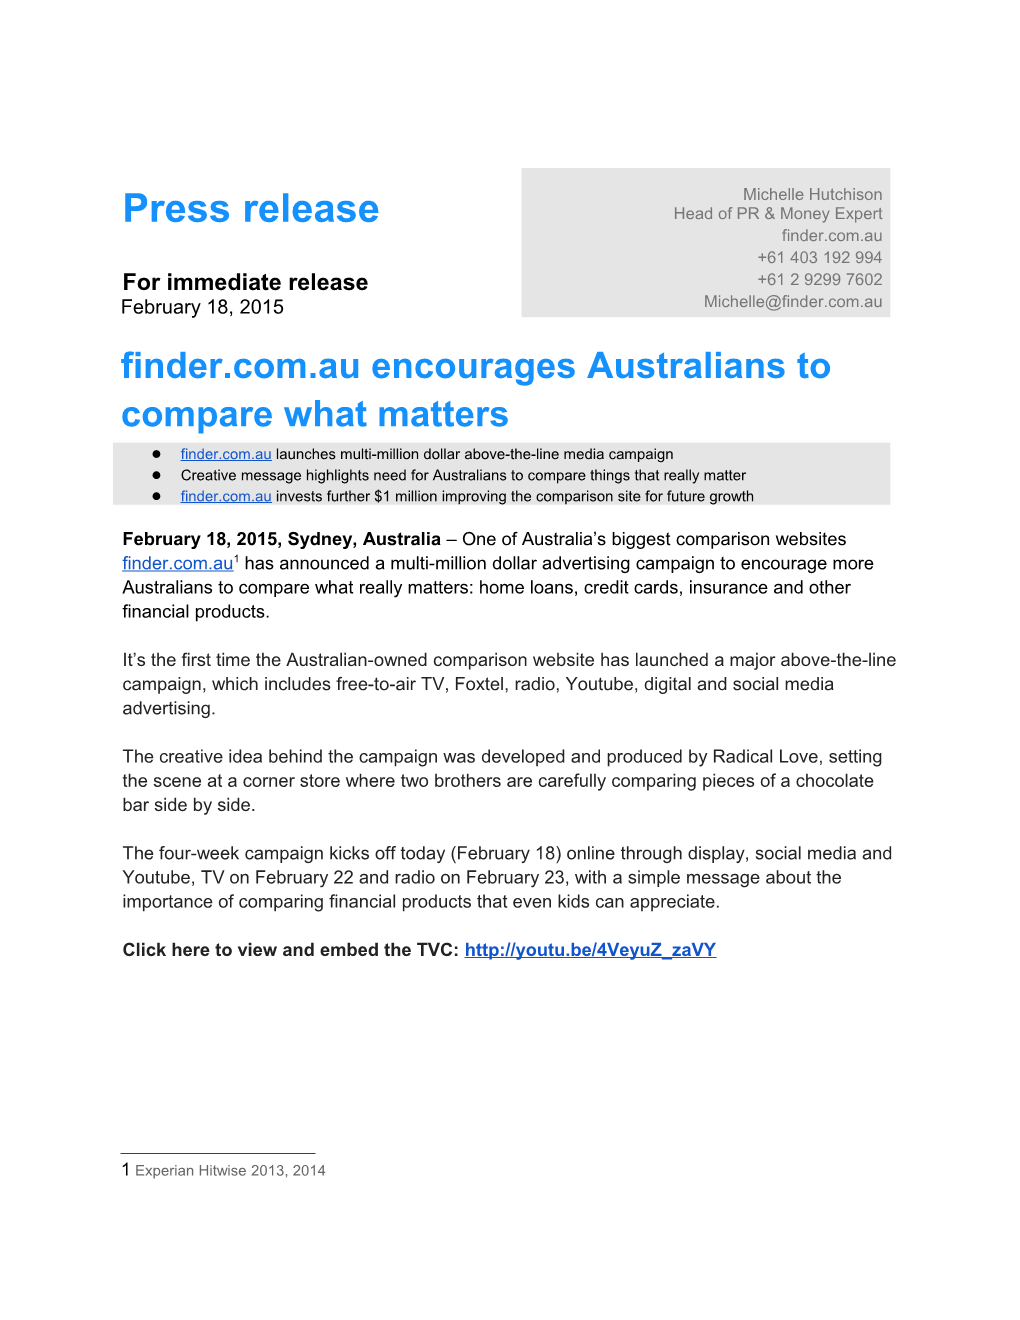 FIN PR Press Release Finder.Com.Au Encourages Australians to Compare What Matters